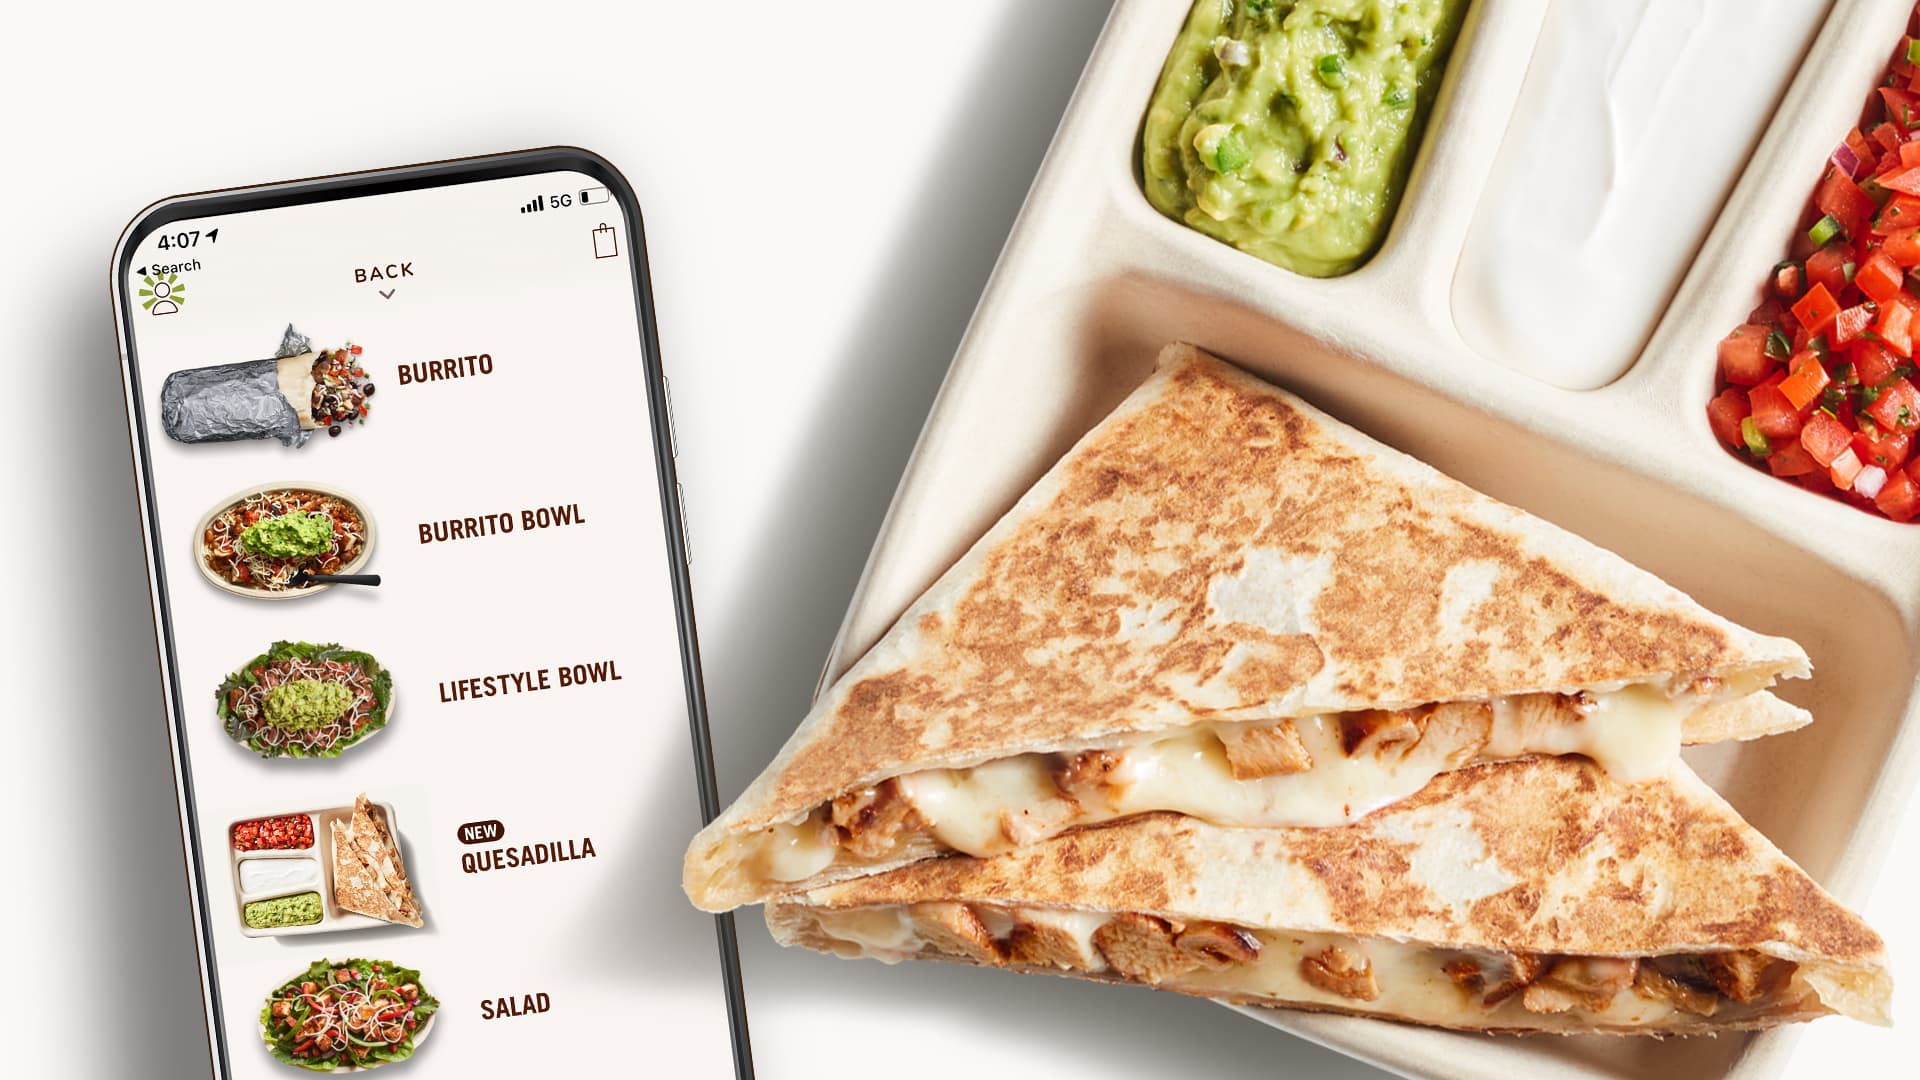 Chipotle quesadillas bring new customers, help increase digital sales